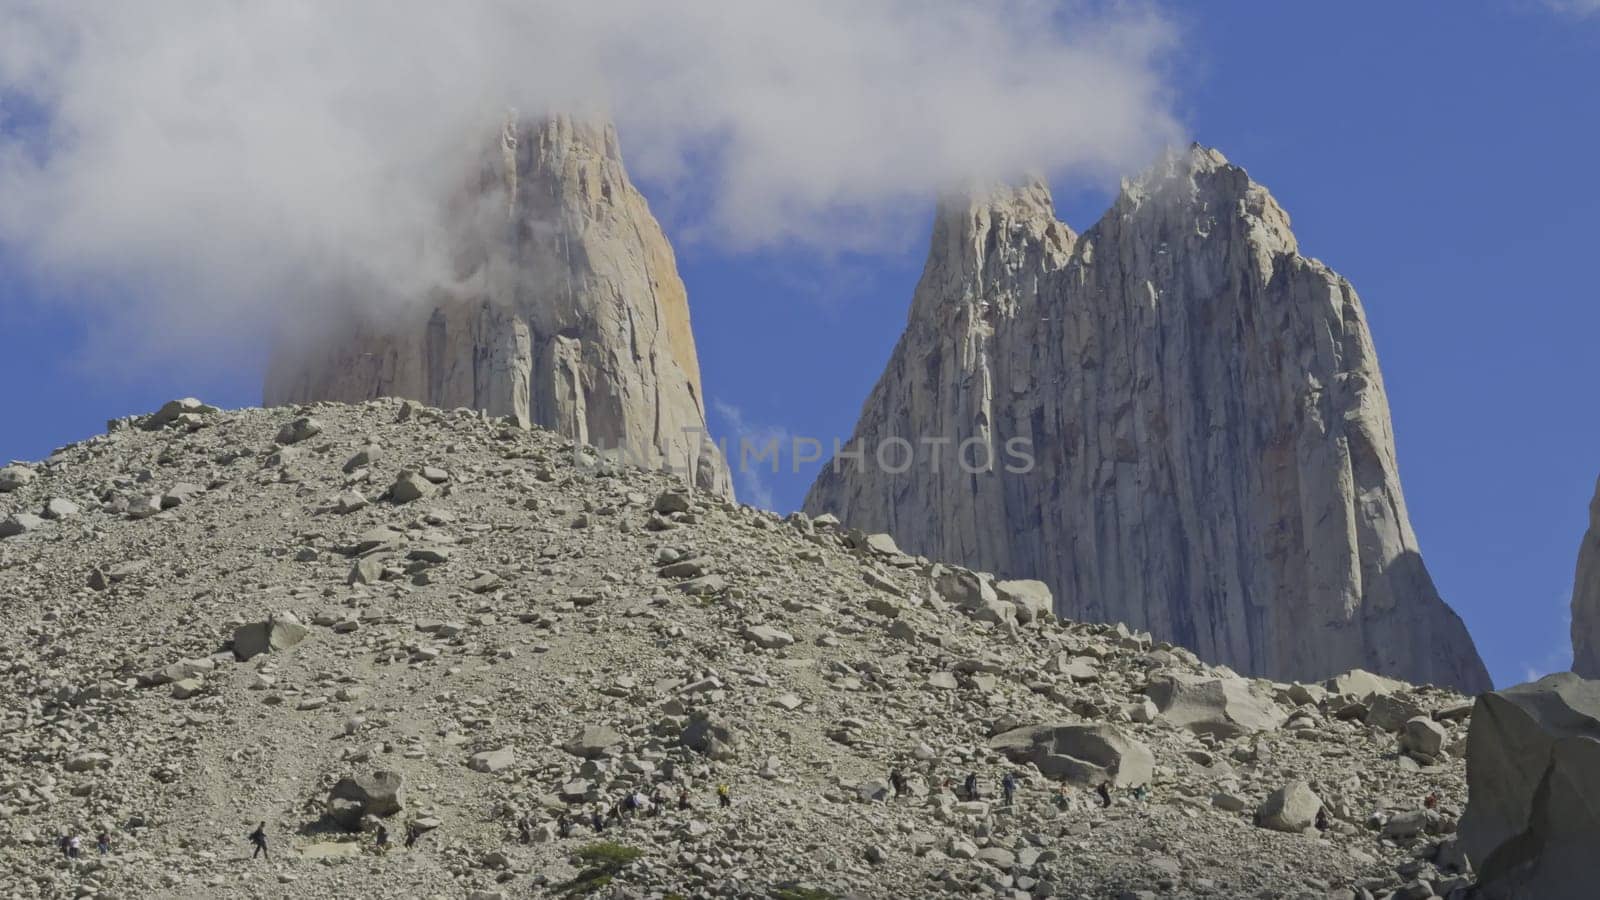 Hikers trek carefully through rough terrain aiming for the iconic Torres del Paine vista.